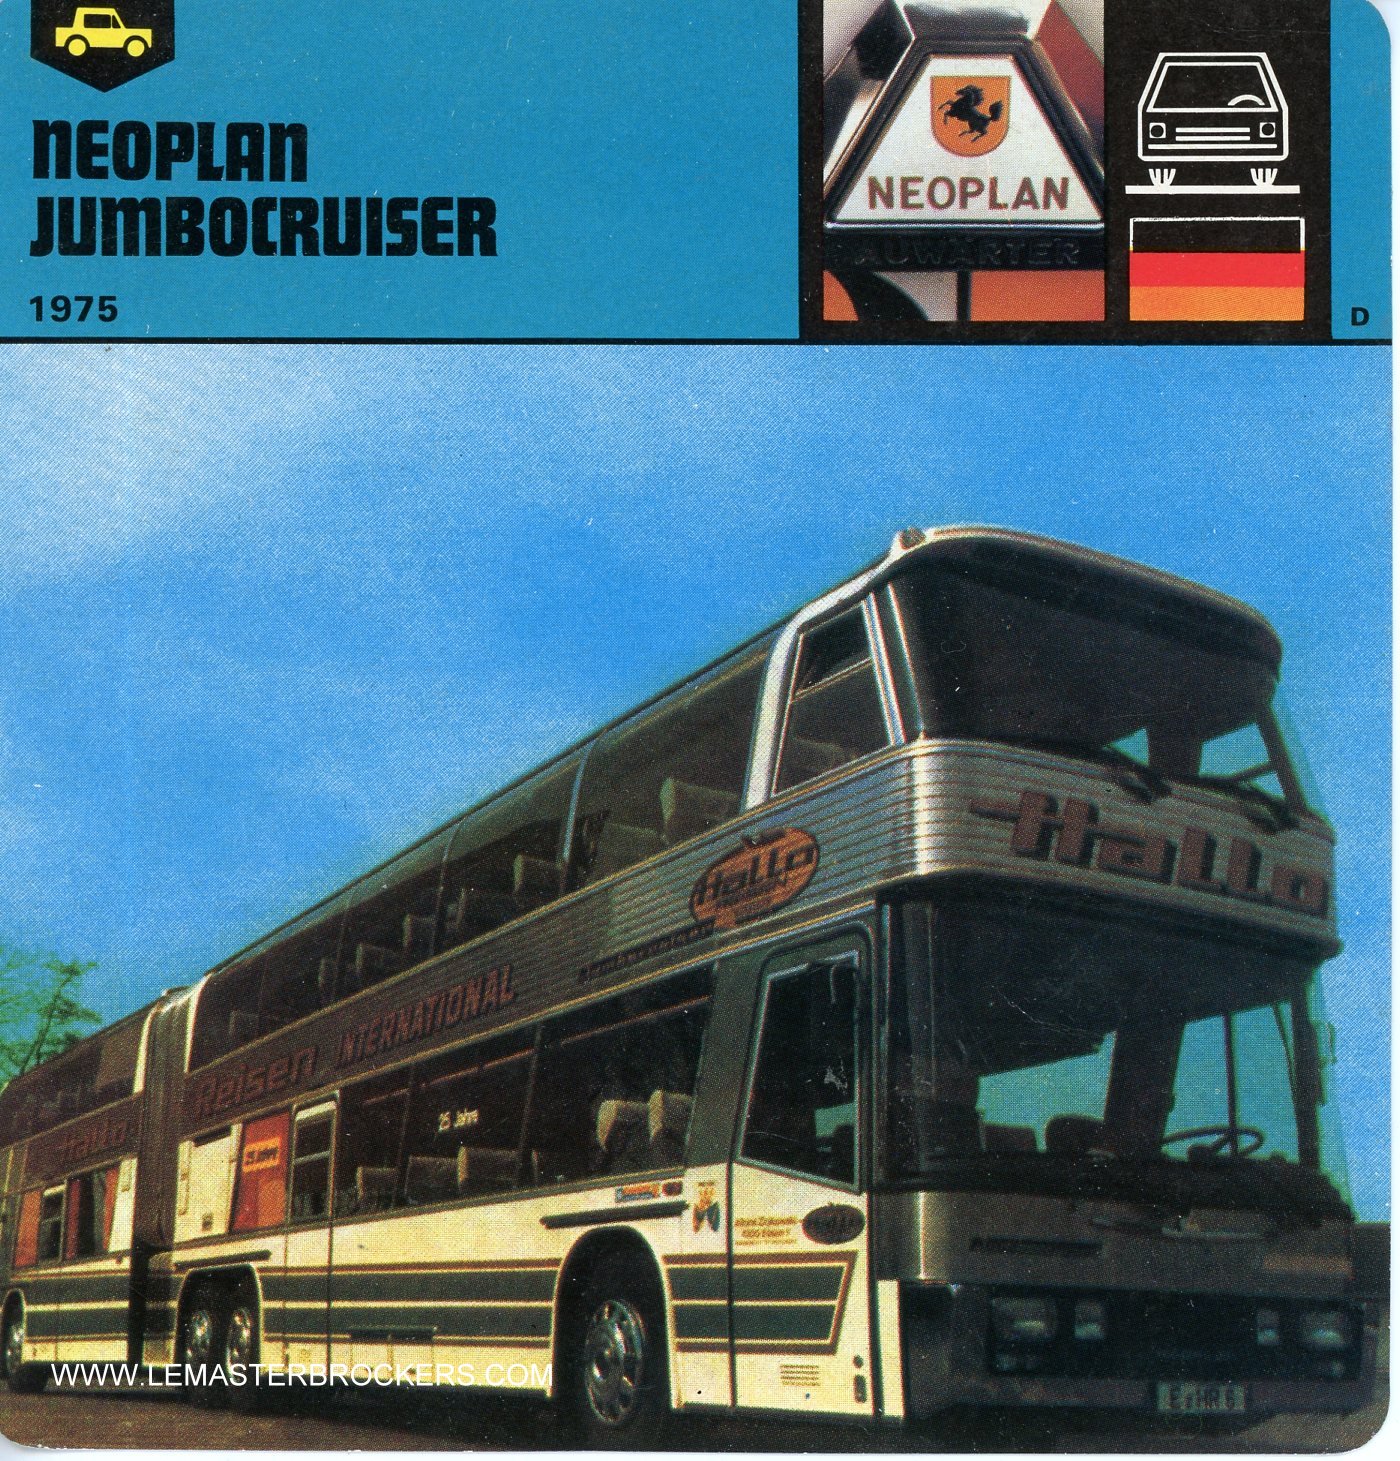 FICHE-NEOPLAN-JUMBOCRUISER-1975-LEMASTERBROCKERS